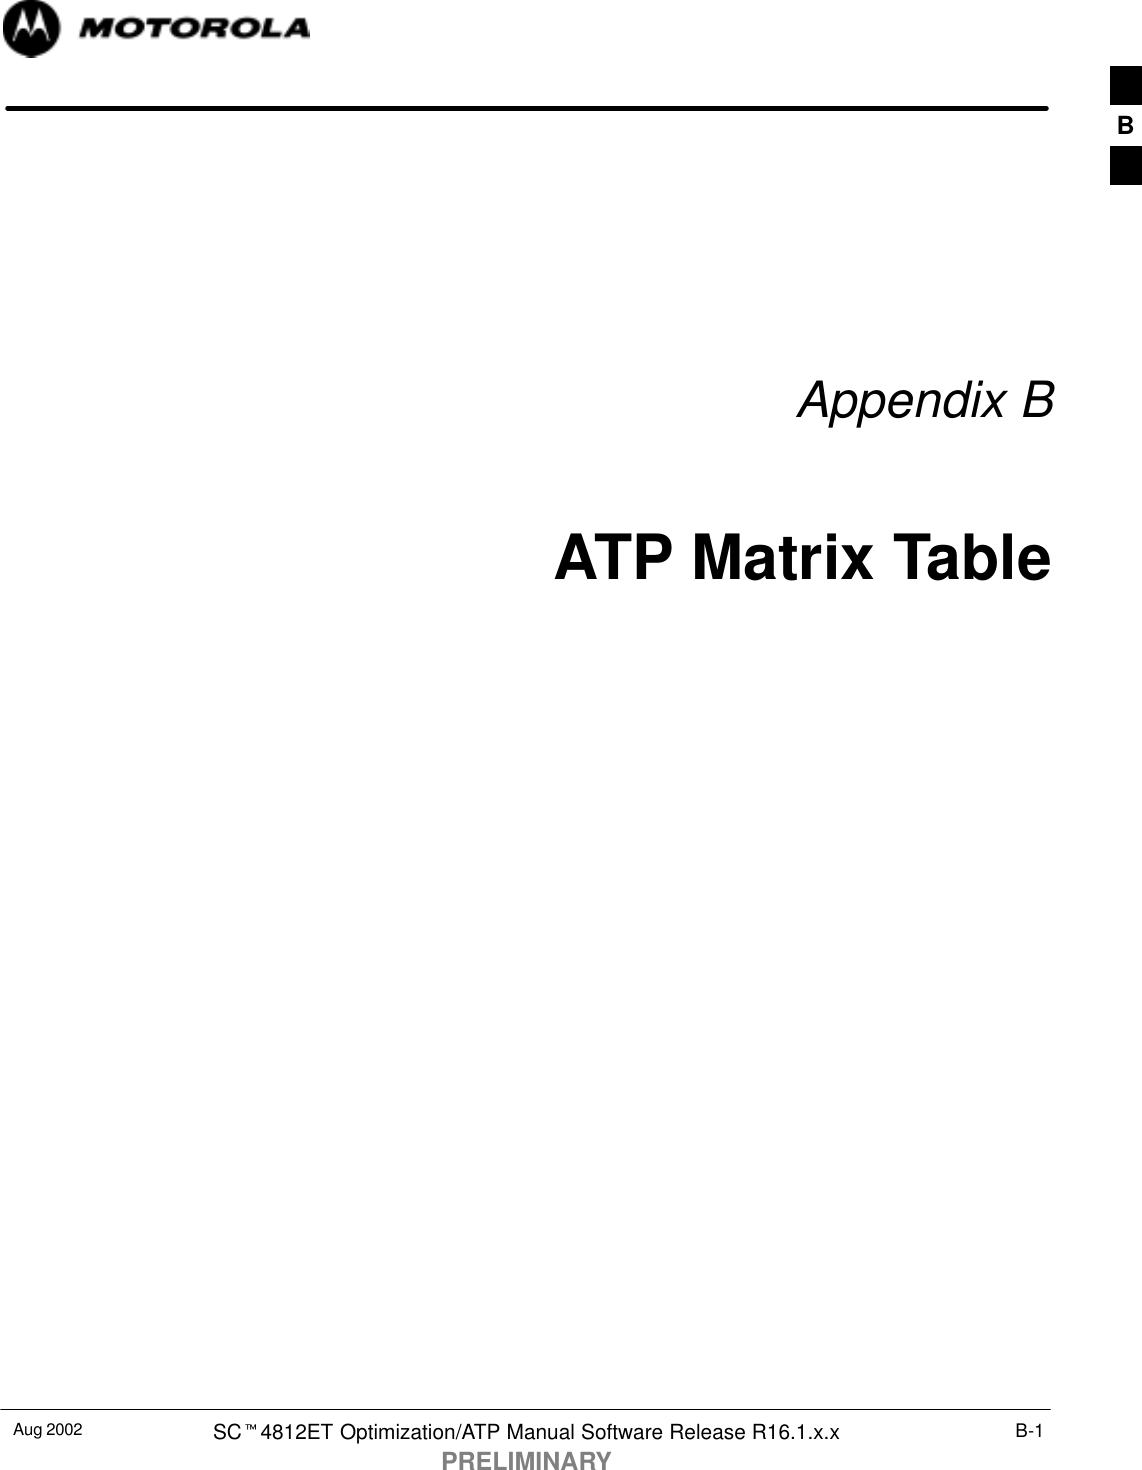 Aug 2002 SCt4812ET Optimization/ATP Manual Software Release R16.1.x.xPRELIMINARYB-1Appendix BATP Matrix TableB